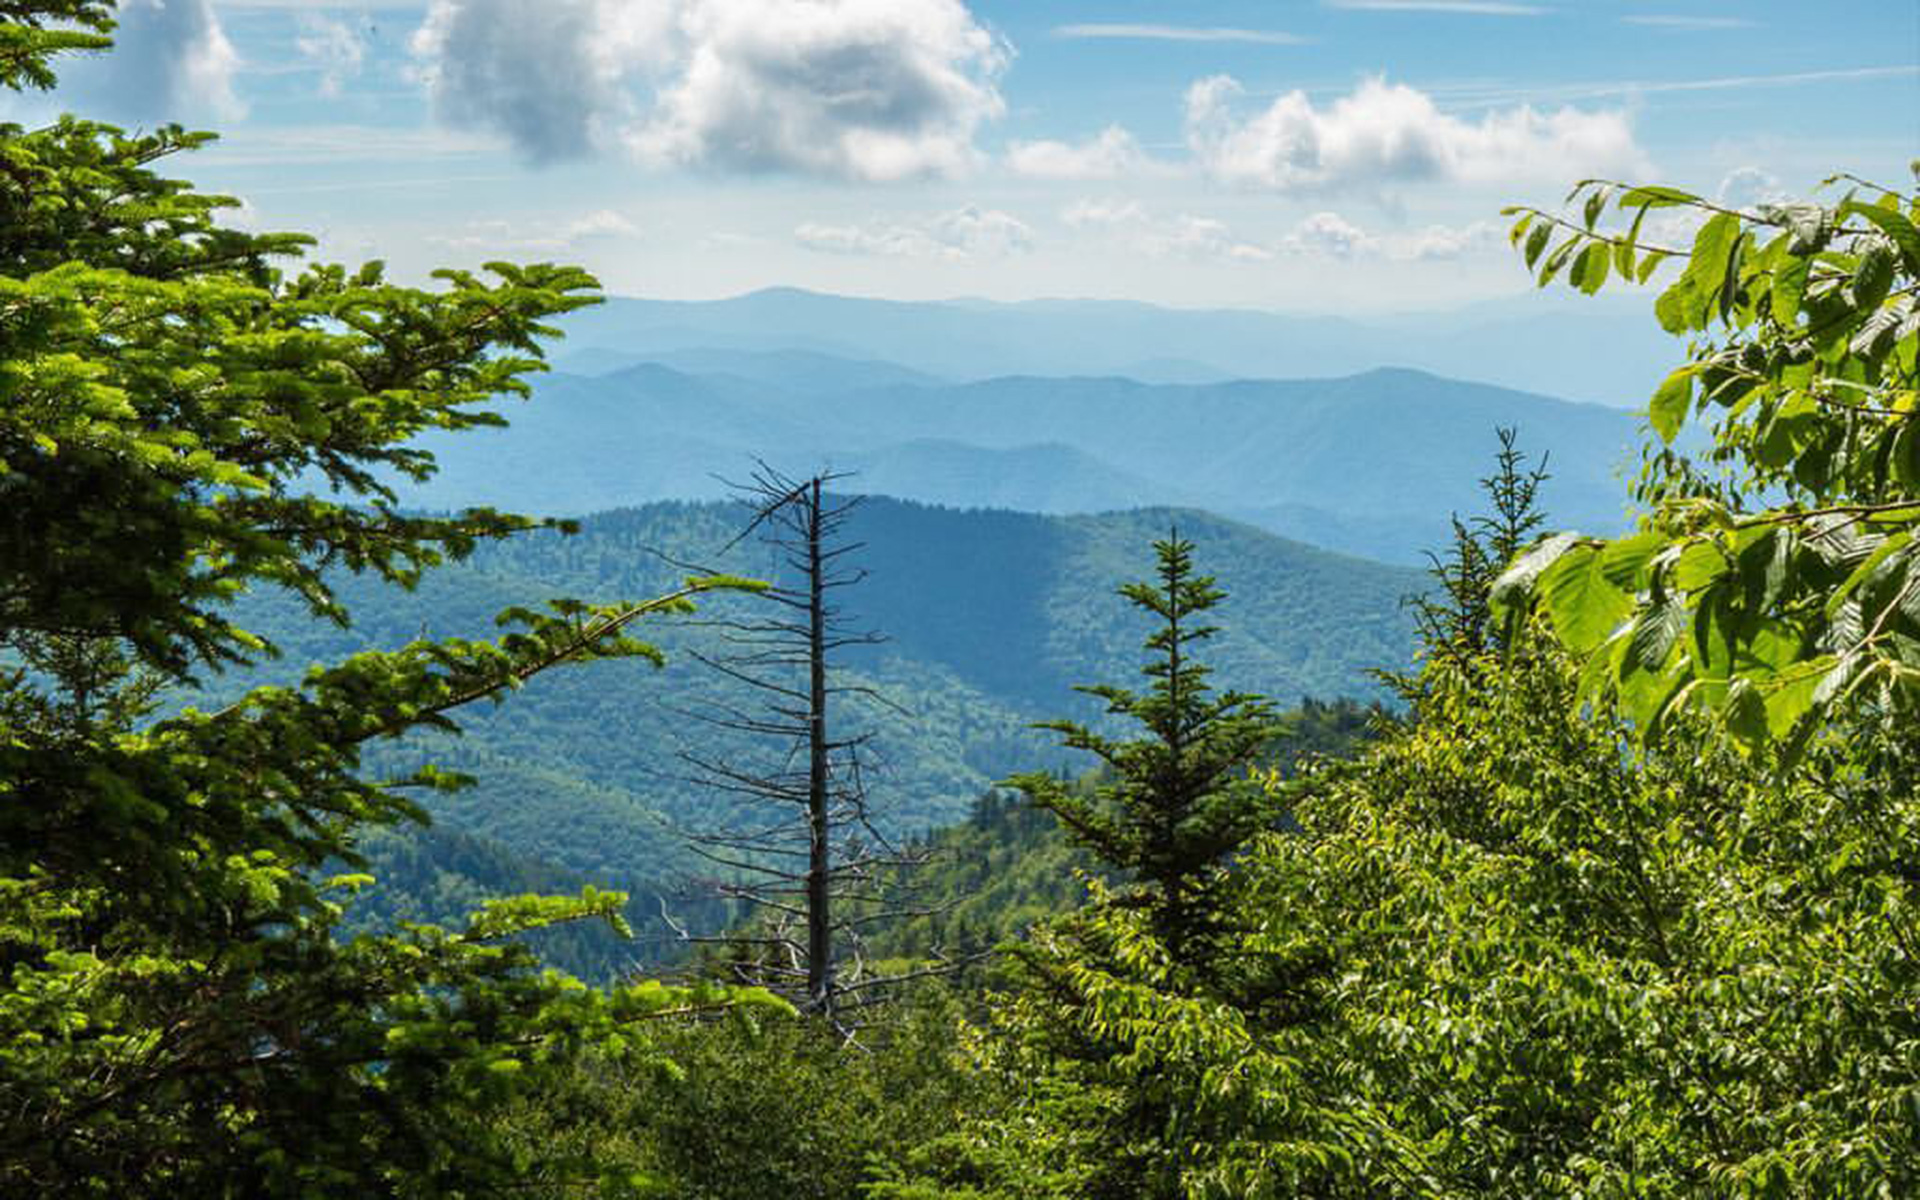 Great Smoky Mountains National Park, Tennessee–North Carolina border